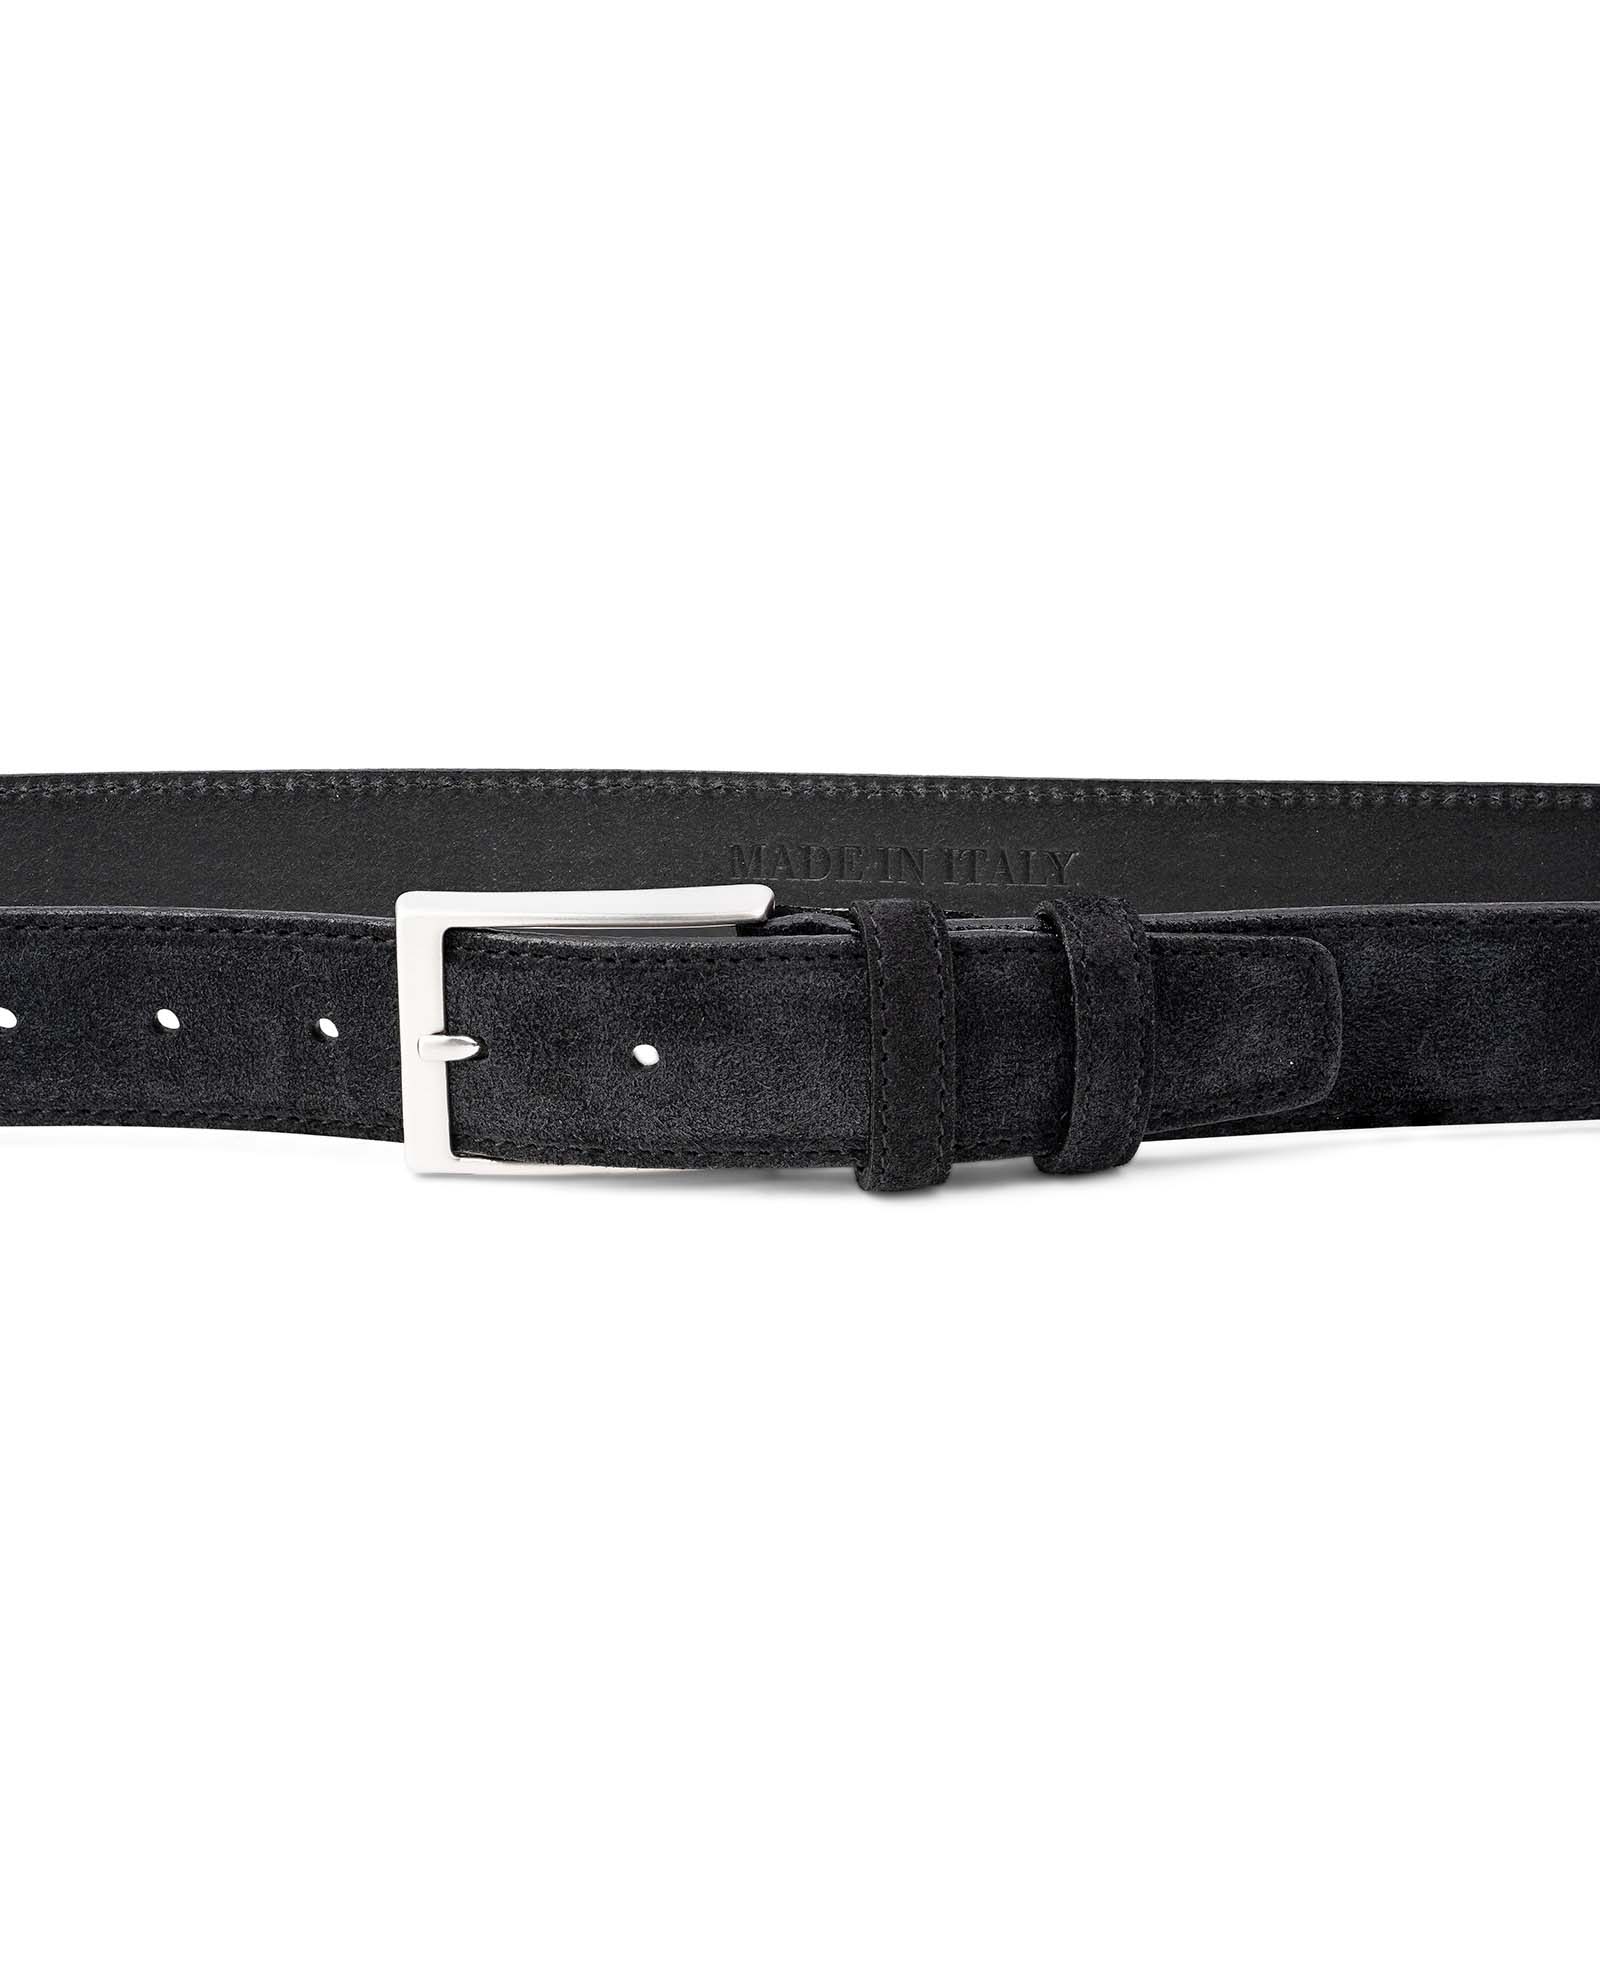 RDumani Mens Belts Suede Leather Belts Black 35mm Up to 46 